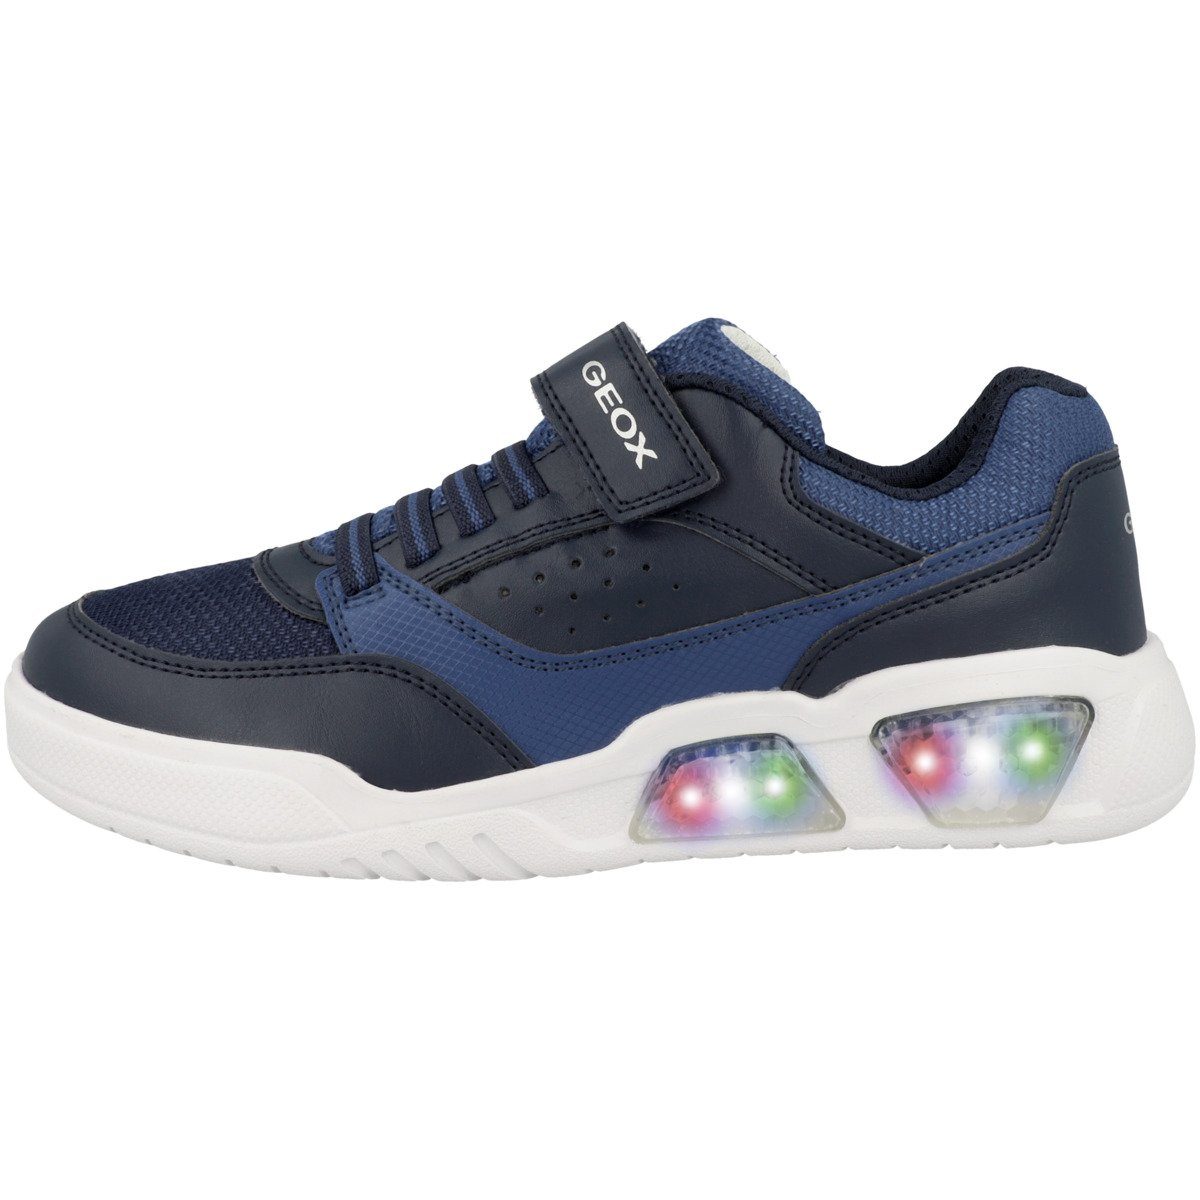 Geox J Illuminus B. Jungen Sneaker B dunkelblau Funktion LED